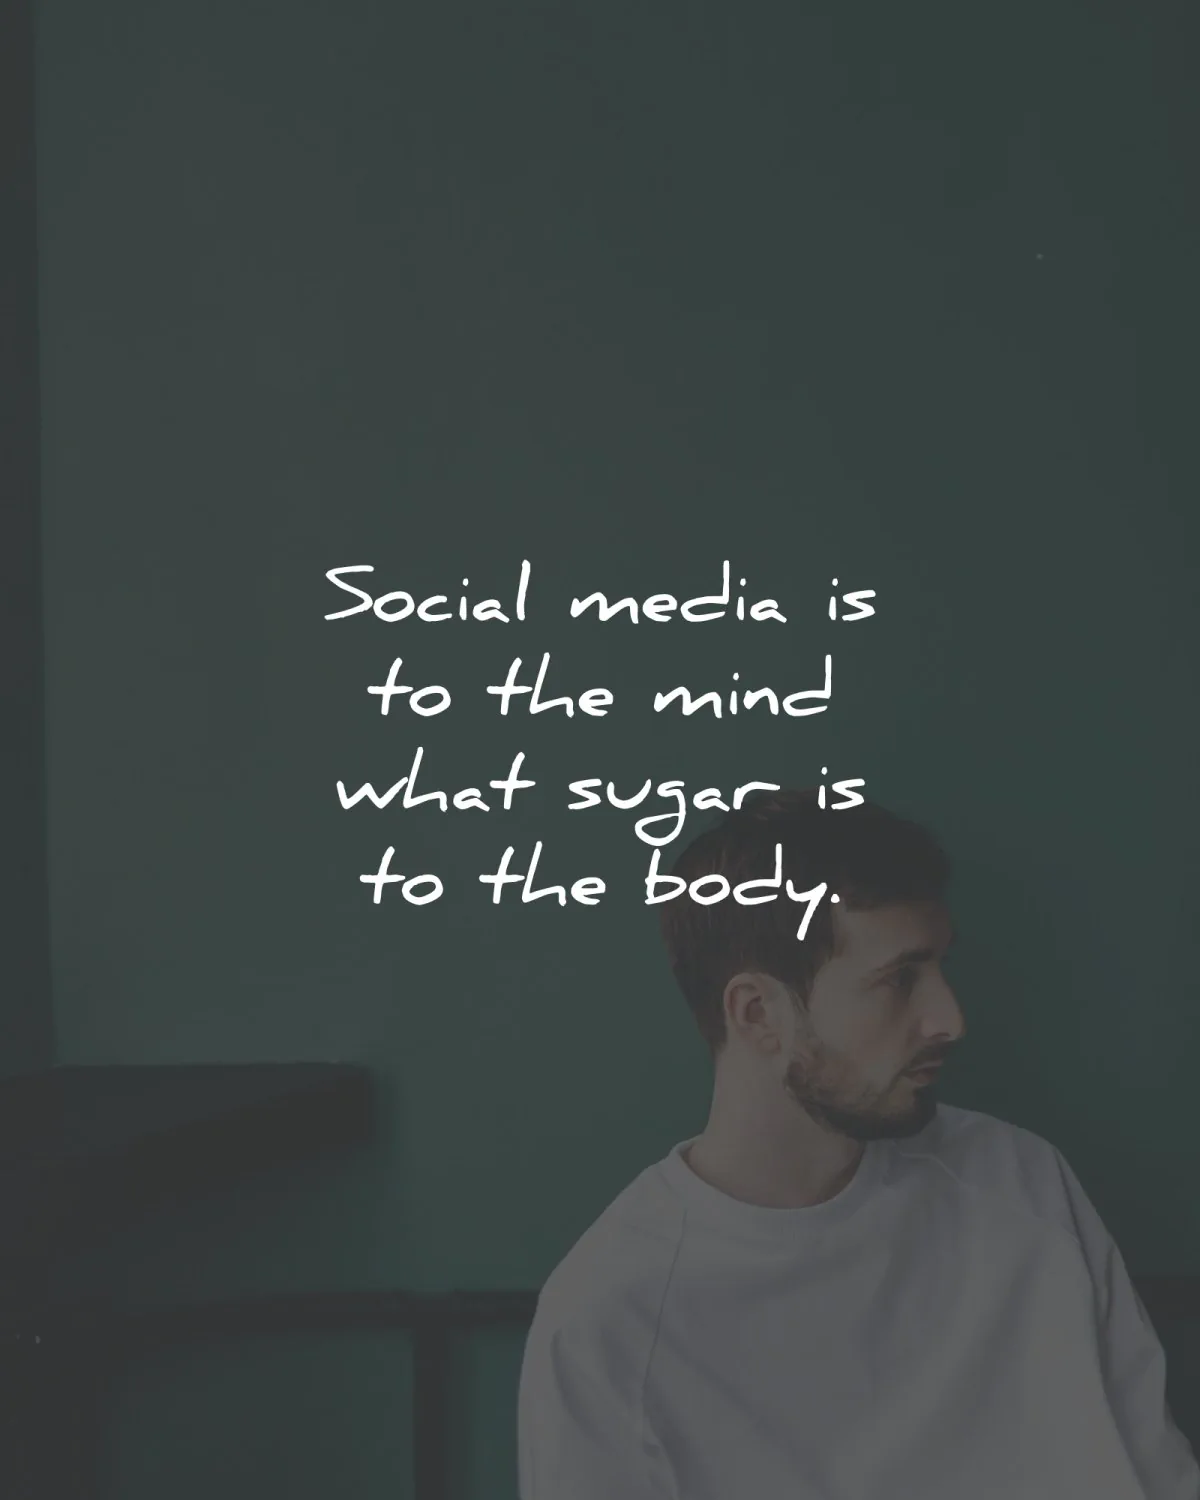 addiction social media quotes mind sugar body wisdom